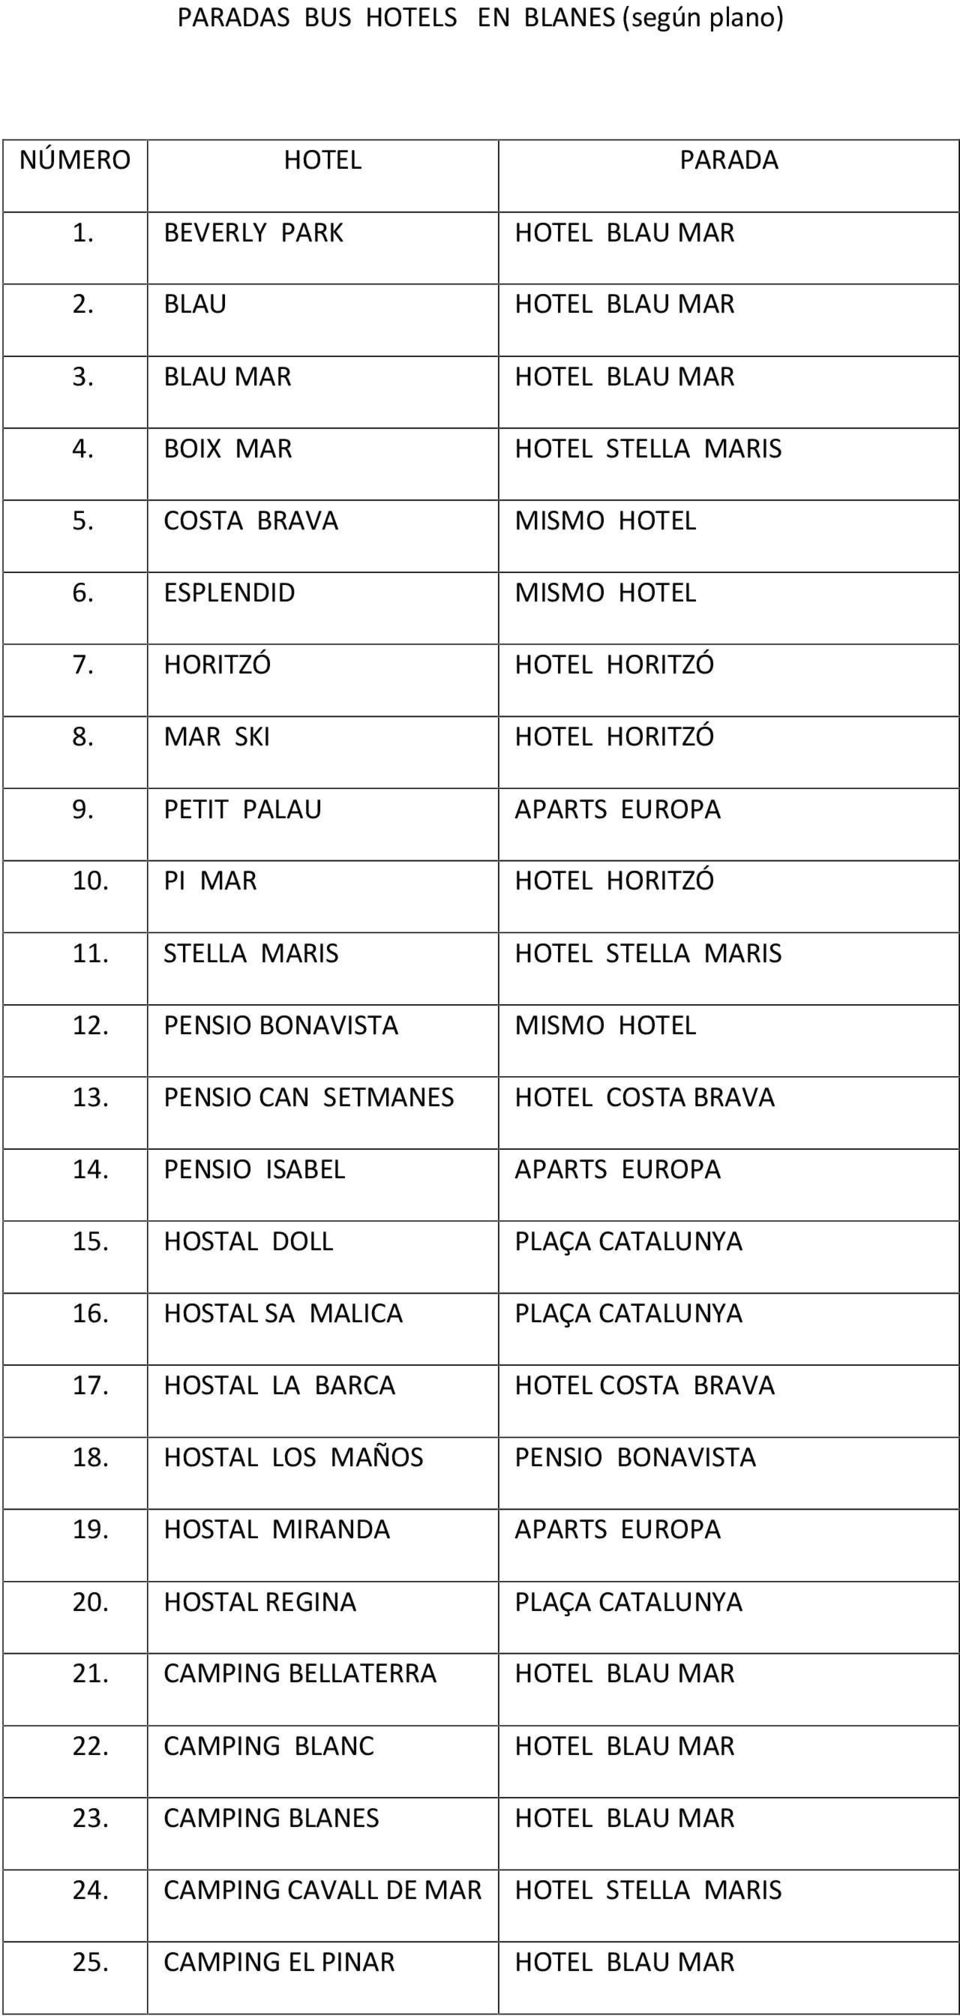 PENSIO BONAVISTA MISMO HOTEL 13. PENSIO CAN SETMANES HOTEL COSTA BRAVA 14. PENSIO ISABEL APARTS EUROPA 15. HOSTAL DOLL PLAÇA CATALUNYA 16. HOSTAL SA MALICA PLAÇA CATALUNYA 17.